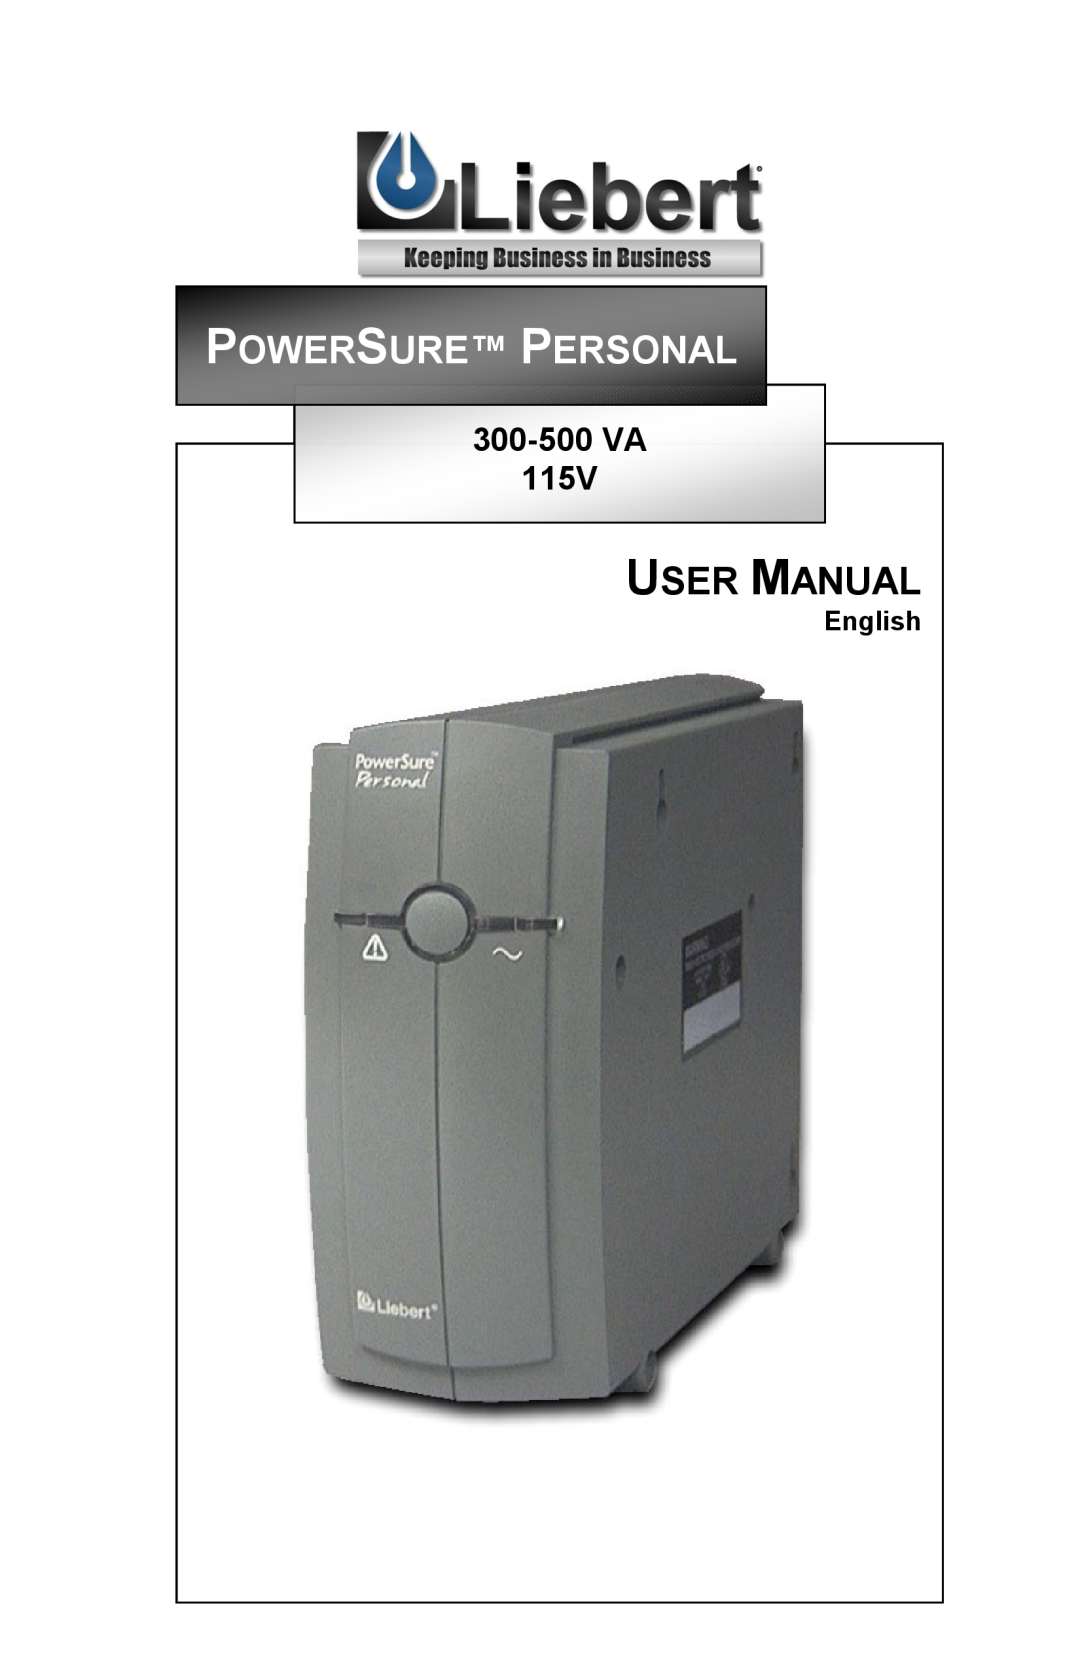 Liebert PowerSure Personal user manual Power Sure Personal, User Manual, 300-500 VA, English, 115V 